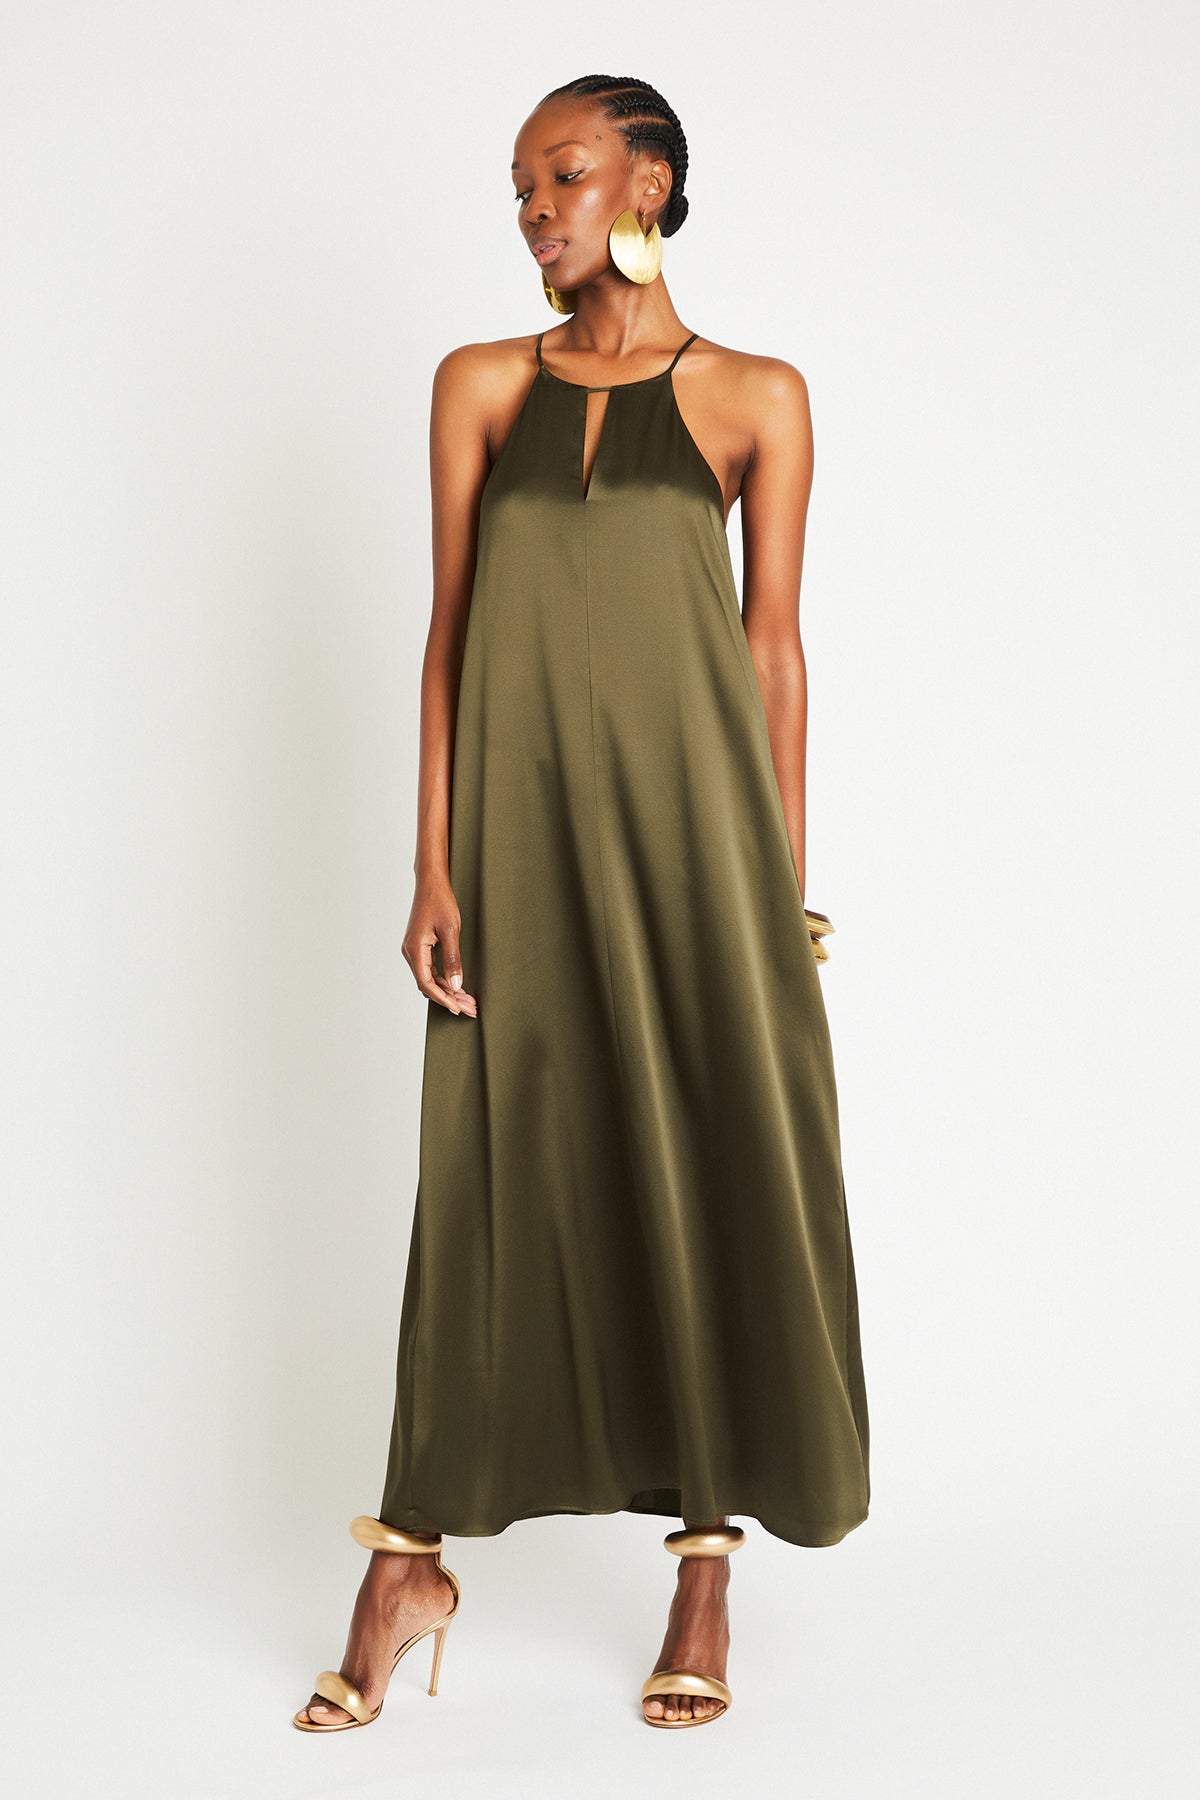 + Beryll Sienna Silk Dress | Olive - + Beryll Sienna Silk Dress | Olive